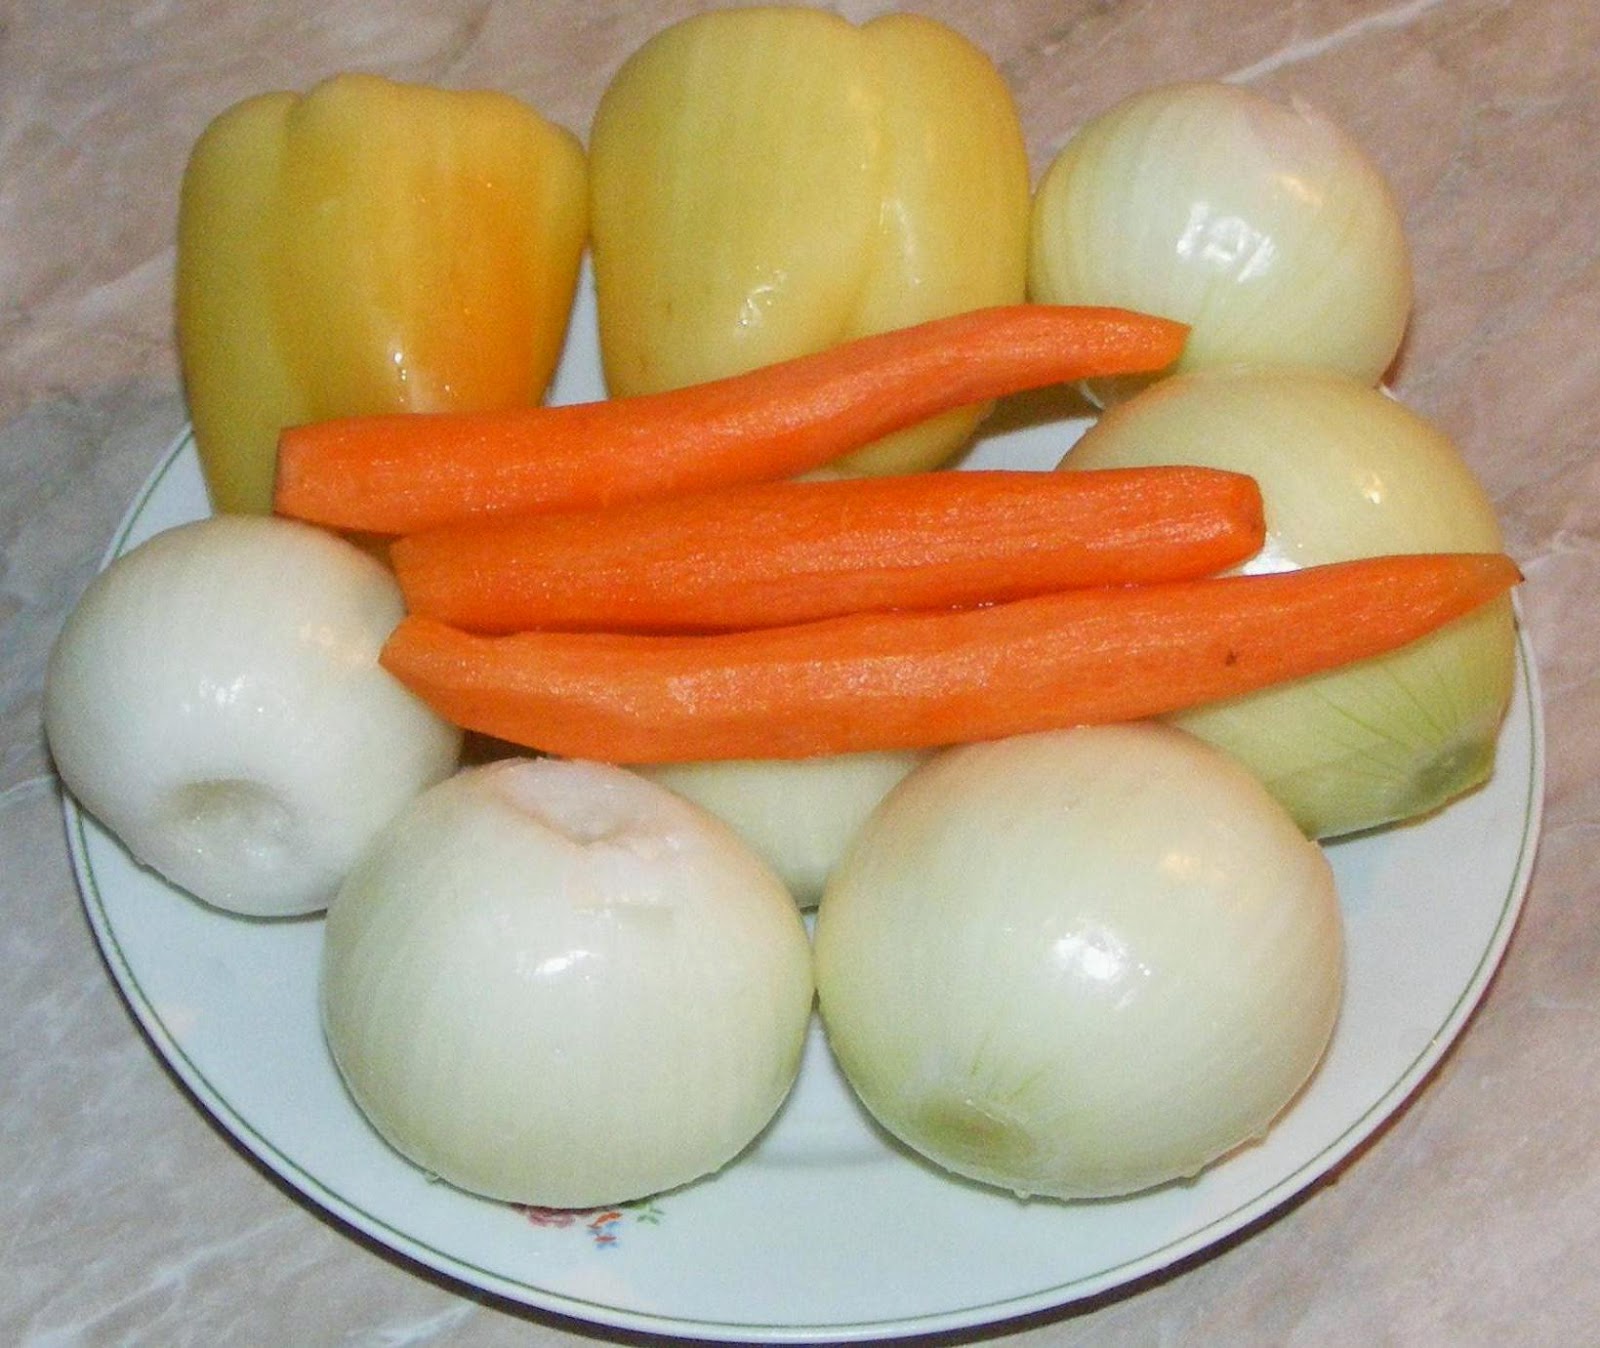 legume, legume pentru gatit, legume pentru mancare, legume proaspete, legume proaspete pentru supe si ciorbe, retete si preparate culinare cu legume, retete de mancare, 